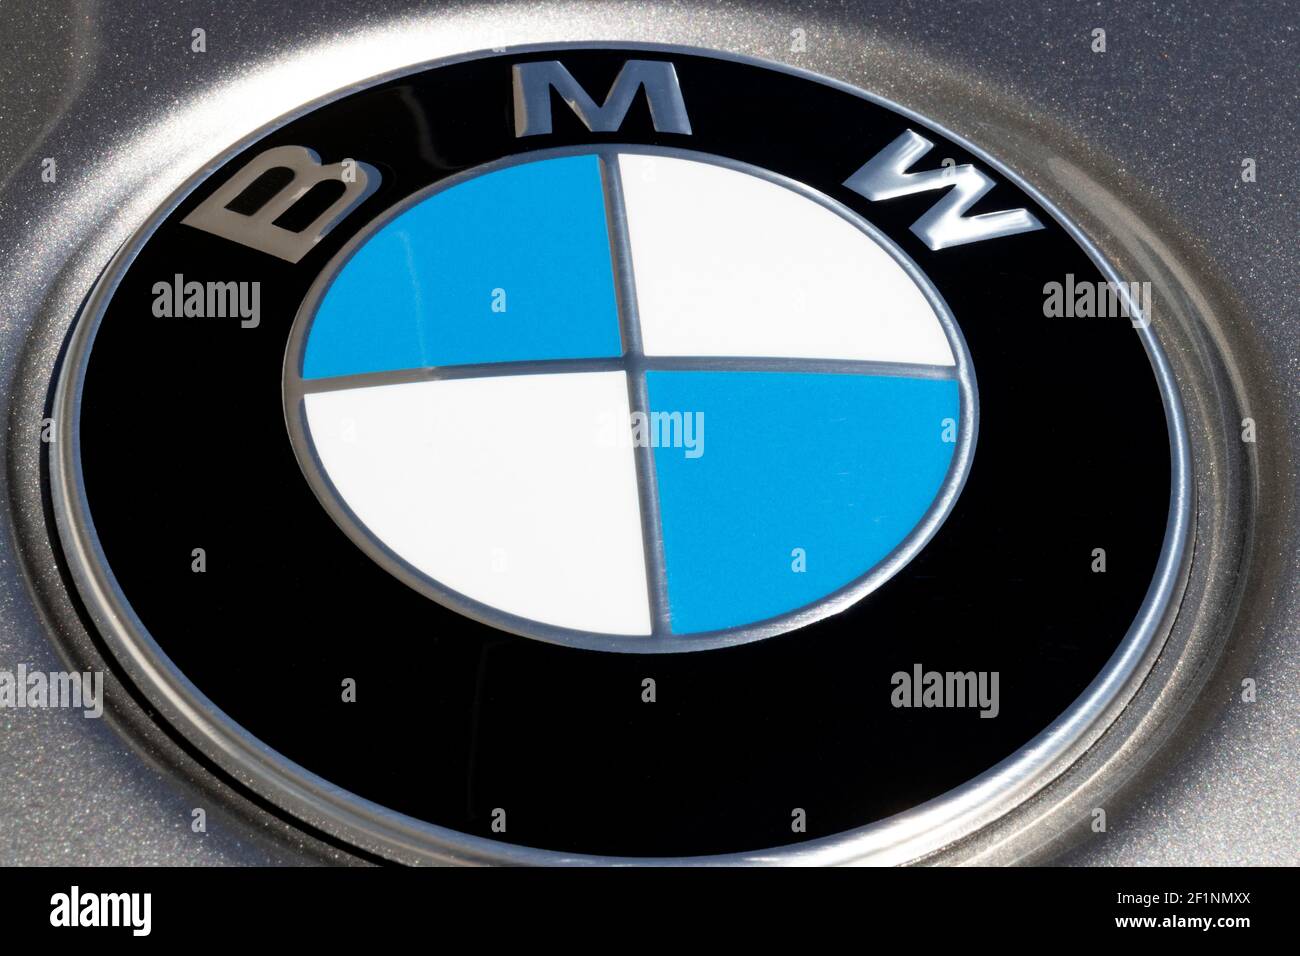 Bmw bayerische motoren werke logo hi-res stock photography and images -  Page 2 - Alamy